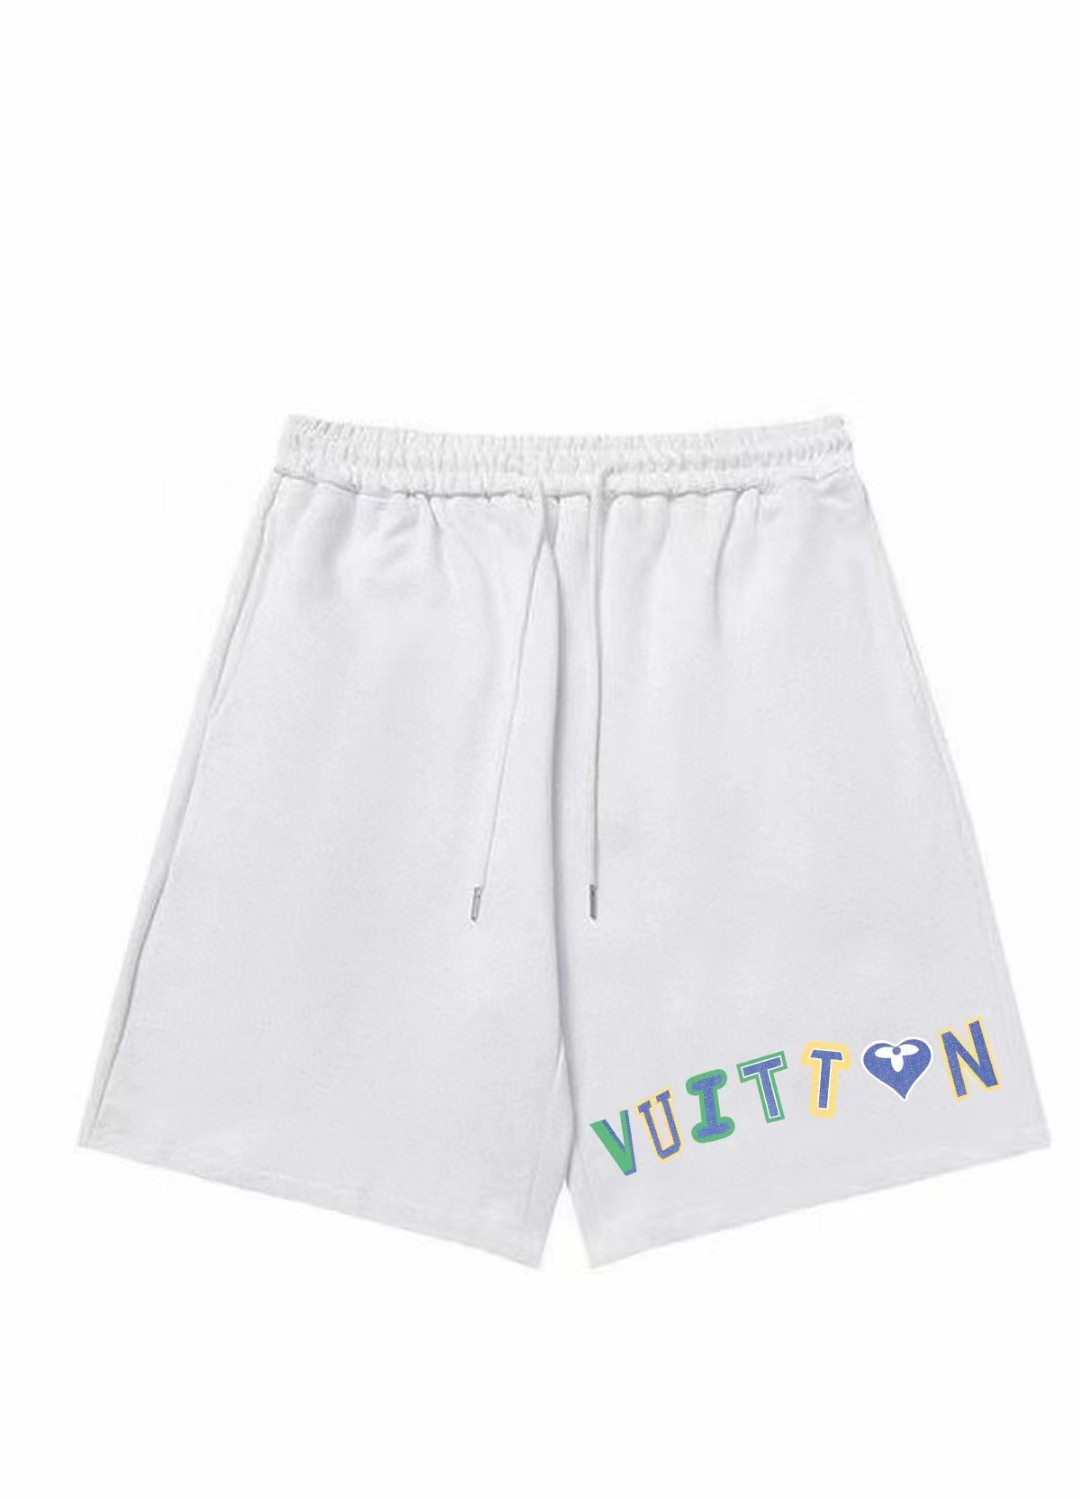 Louis Vuitton Clothing Shorts Black White